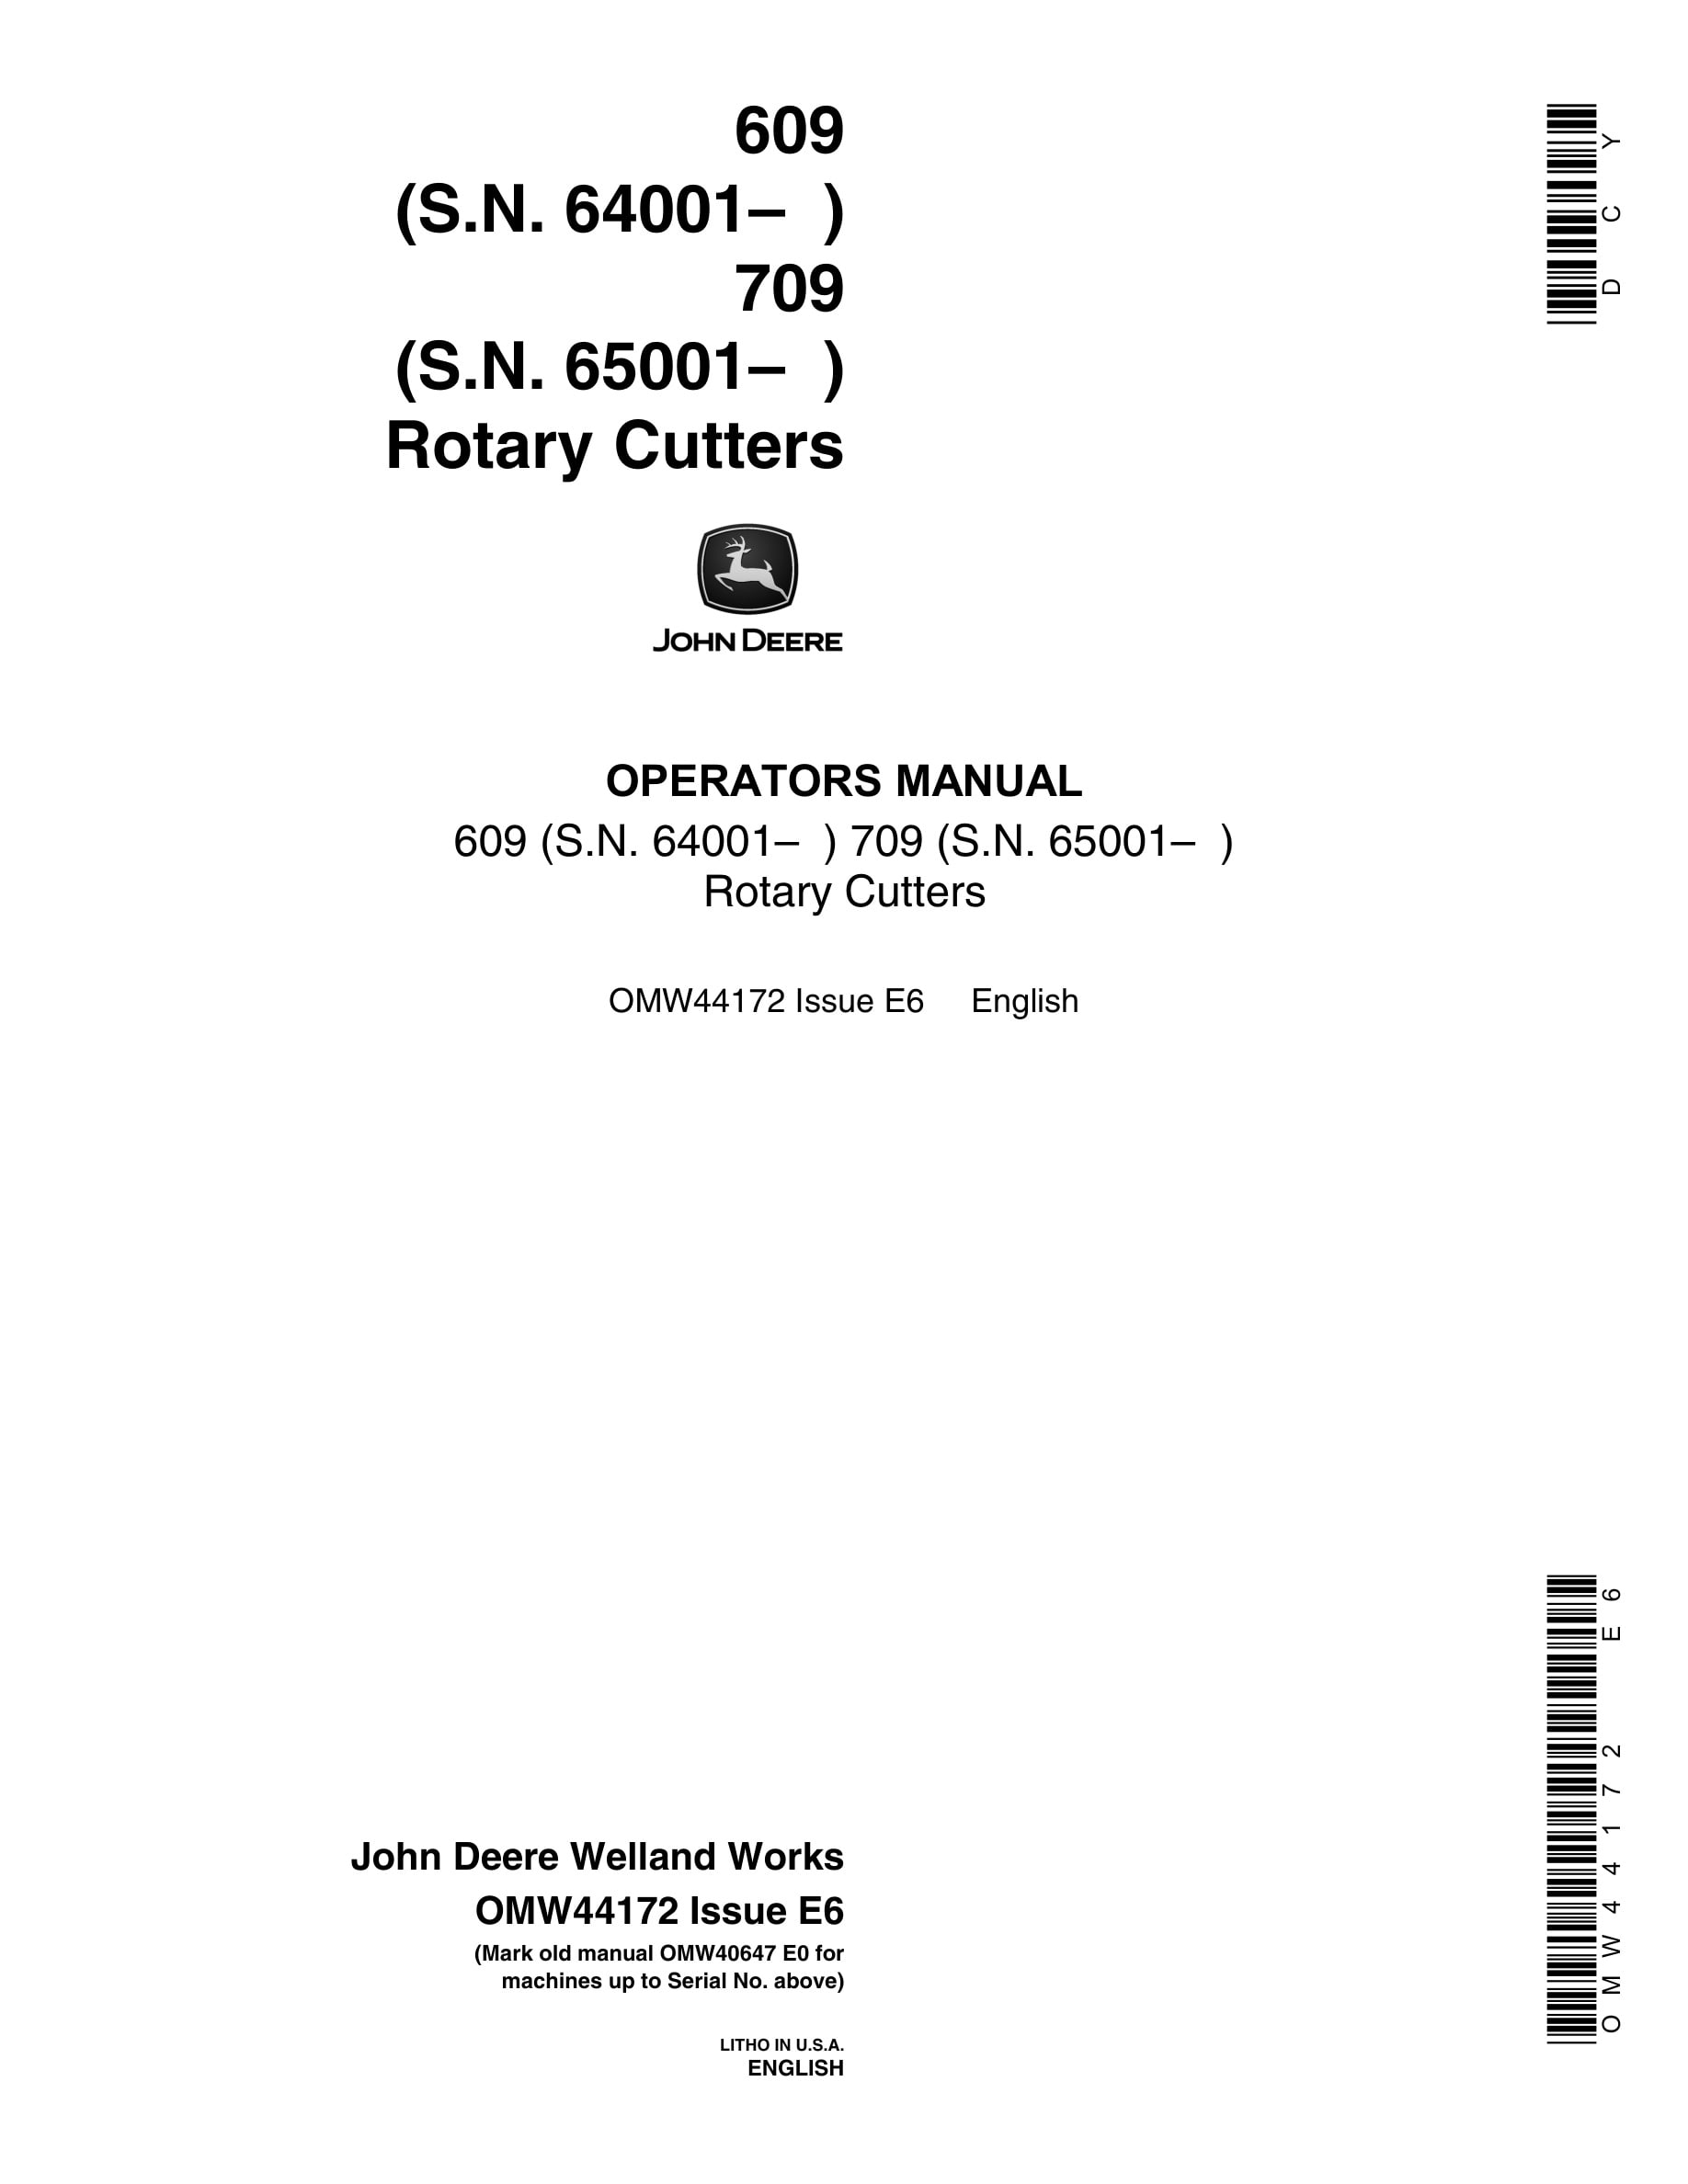 John Deere 609 709 Rotary Cutter Operator Manual OMW44172-1